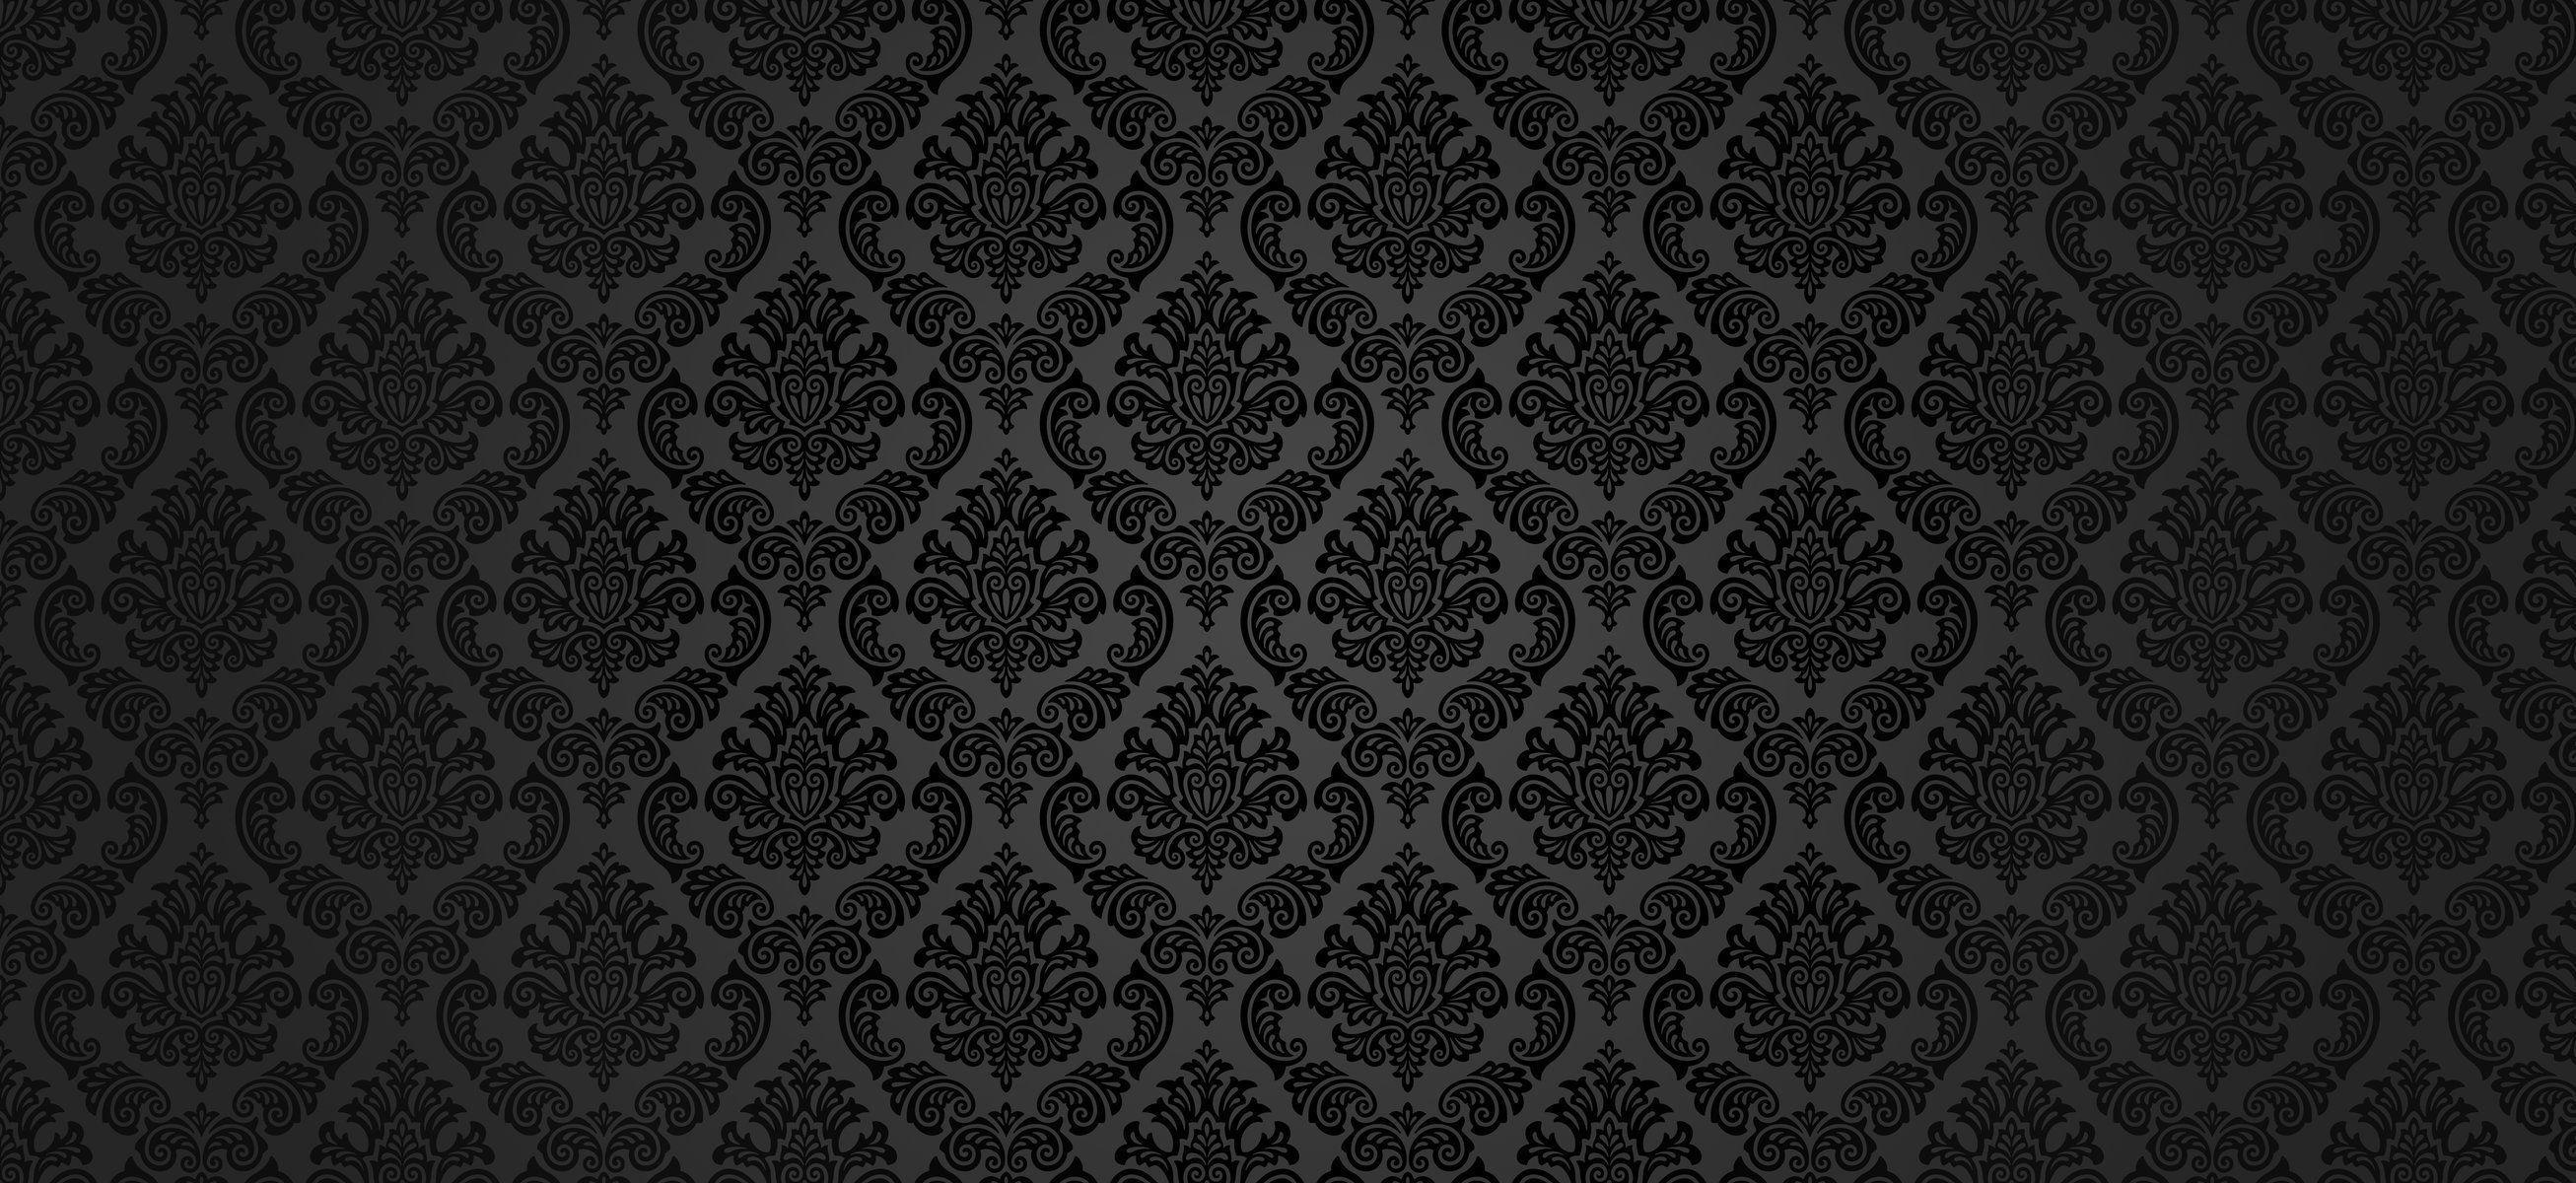 Black Aesthetic Wallpapers  Download 45 Free Black Aesthetic Wallpaper